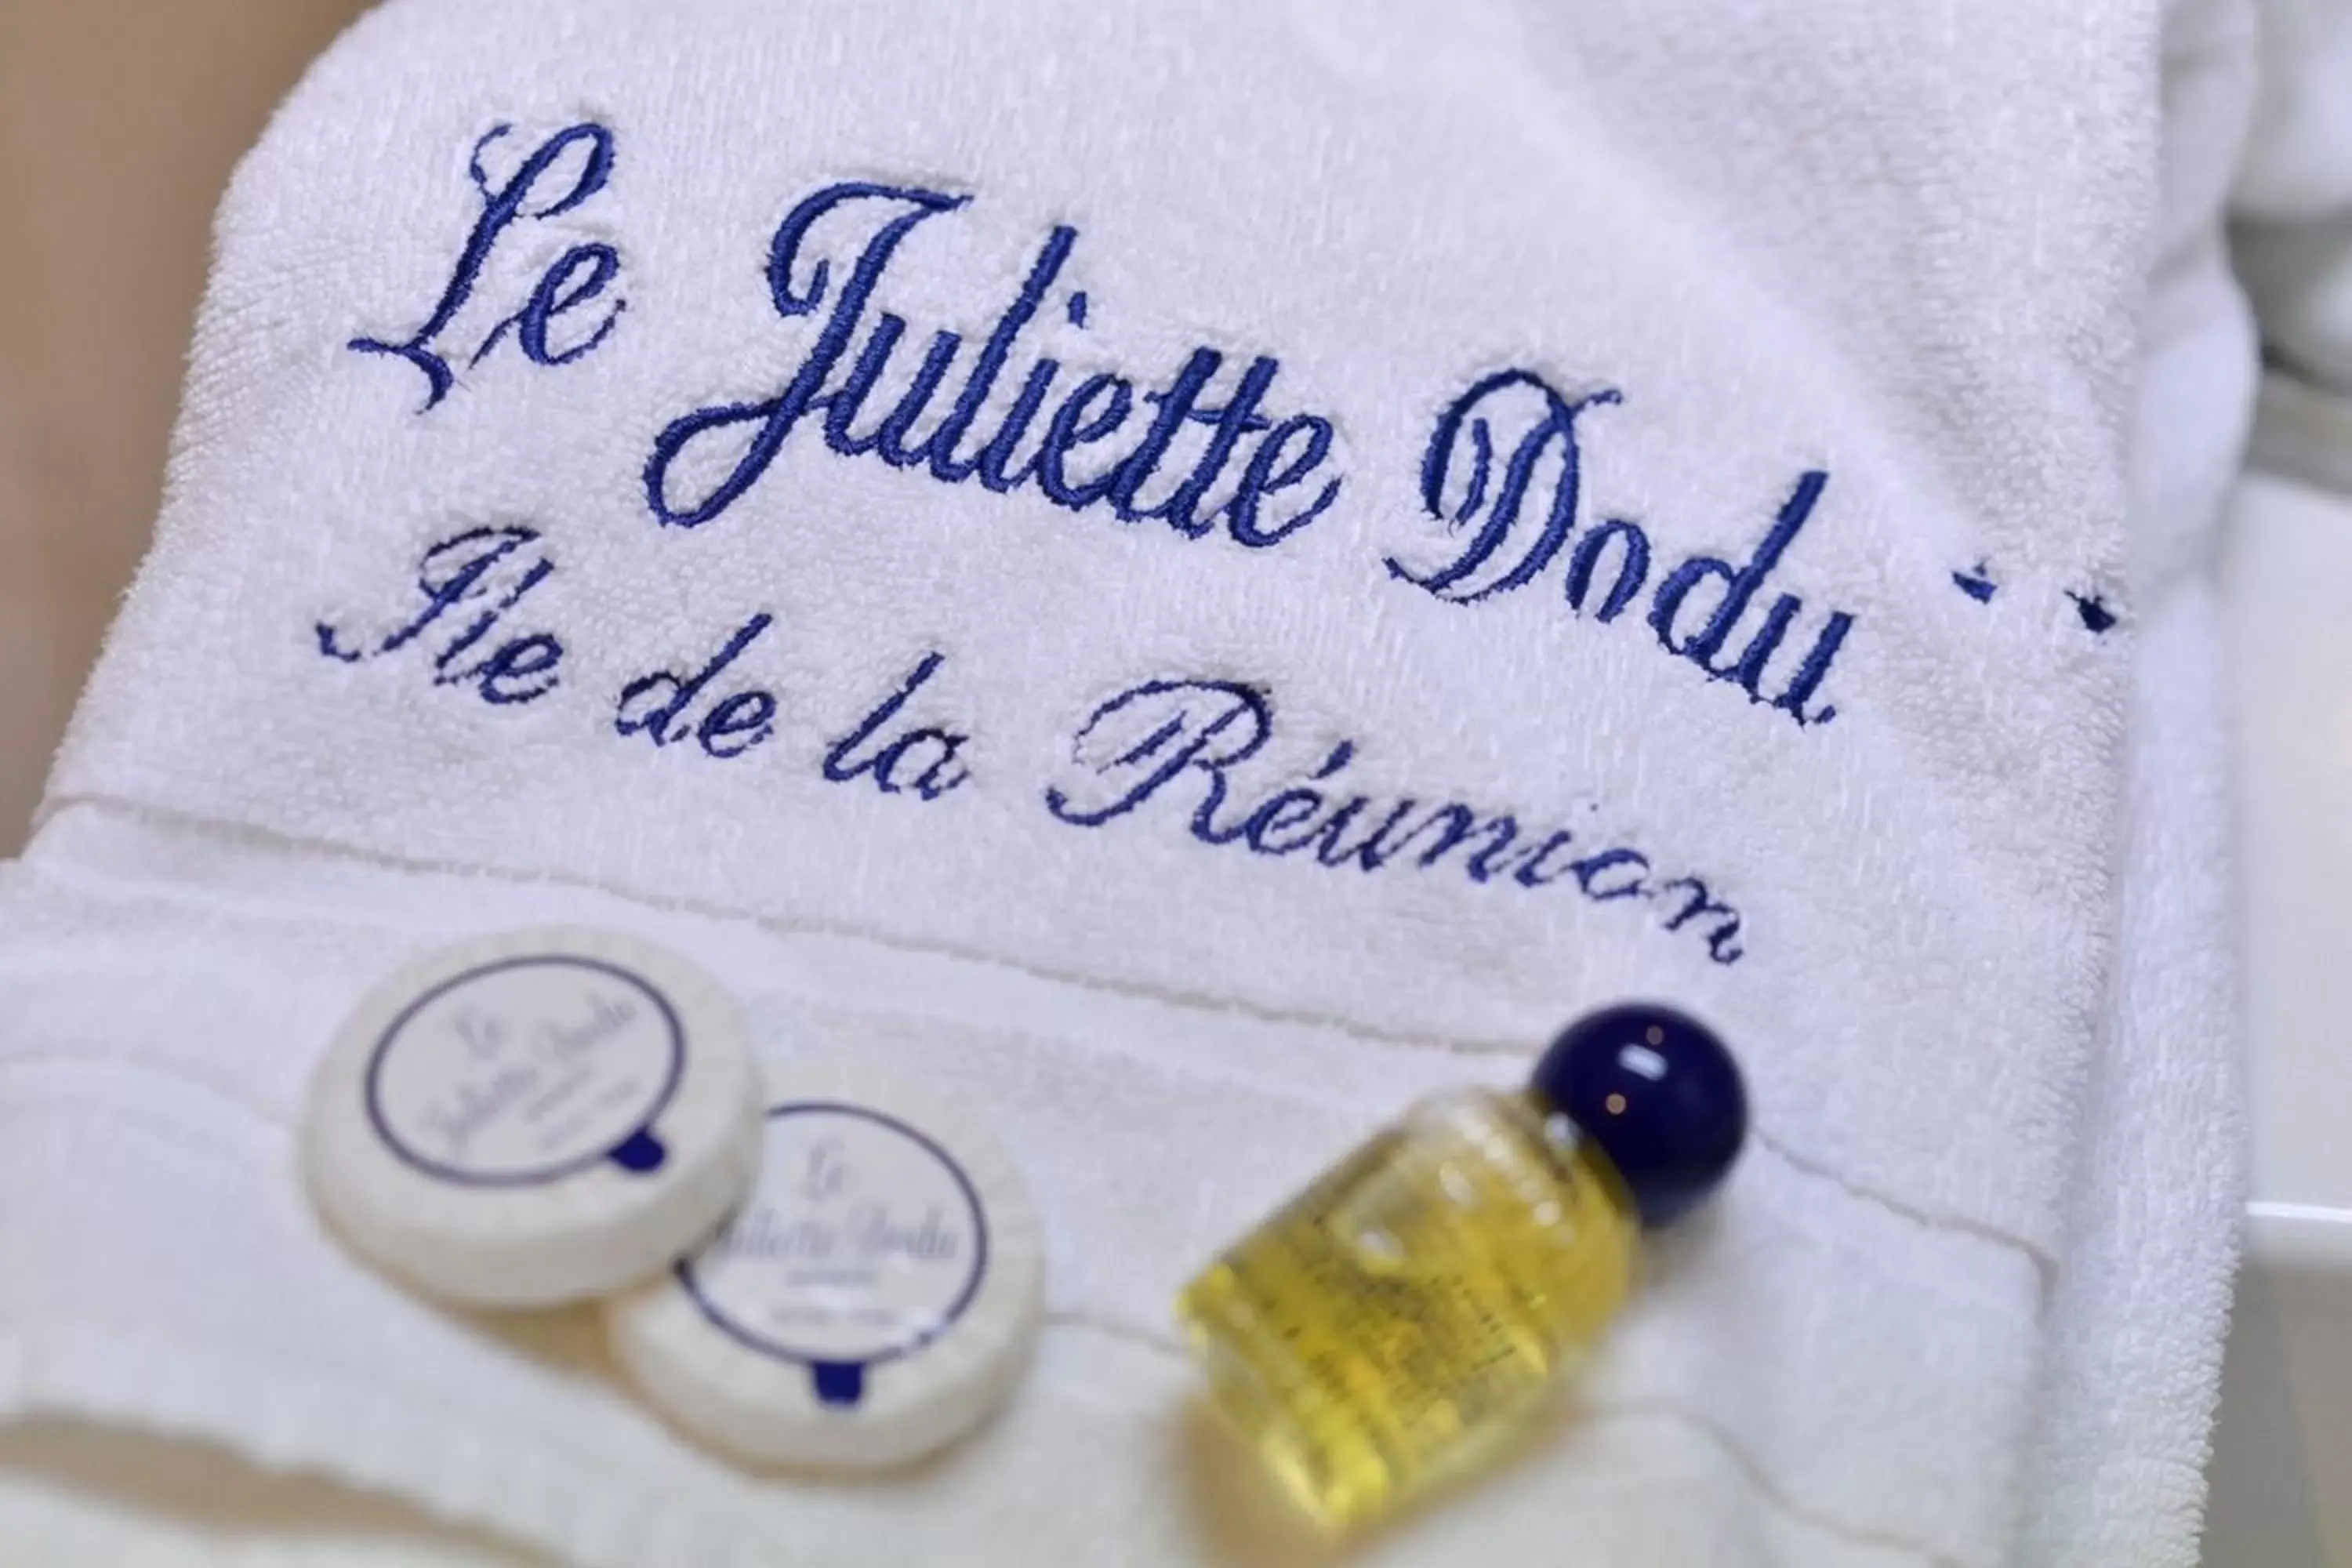 Decorative detail in Le Juliette Dodu